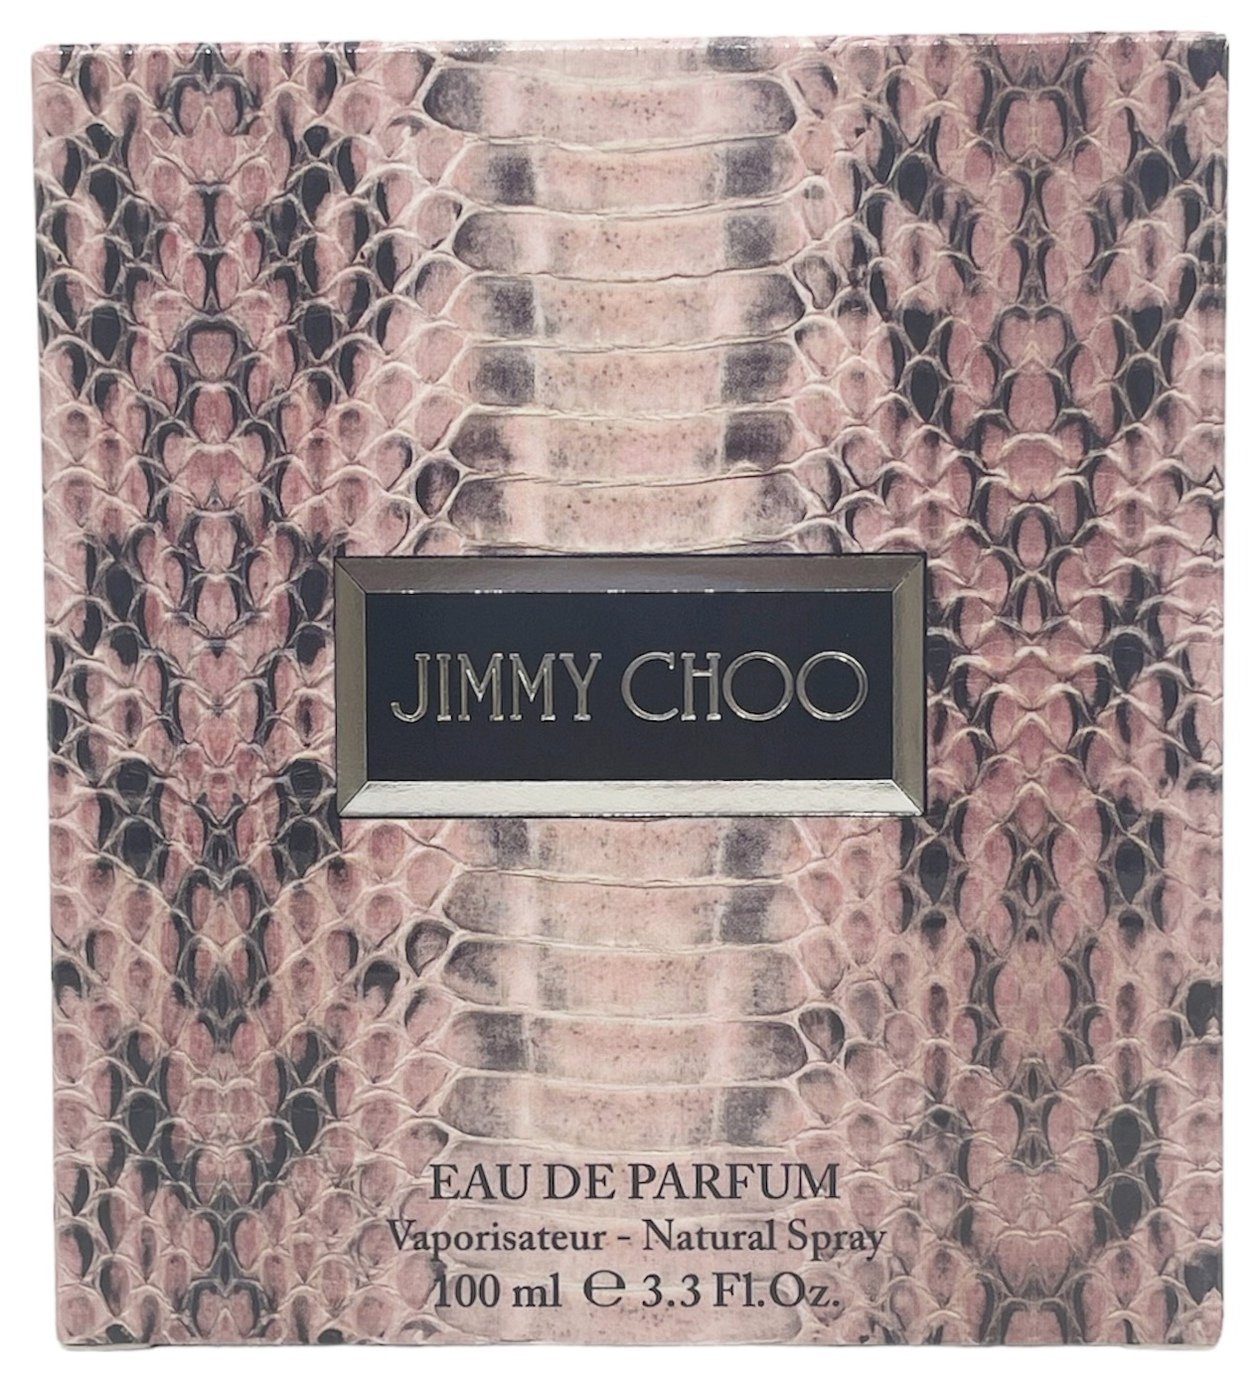 Jimmy Choo Eau de Parfum - 100ml